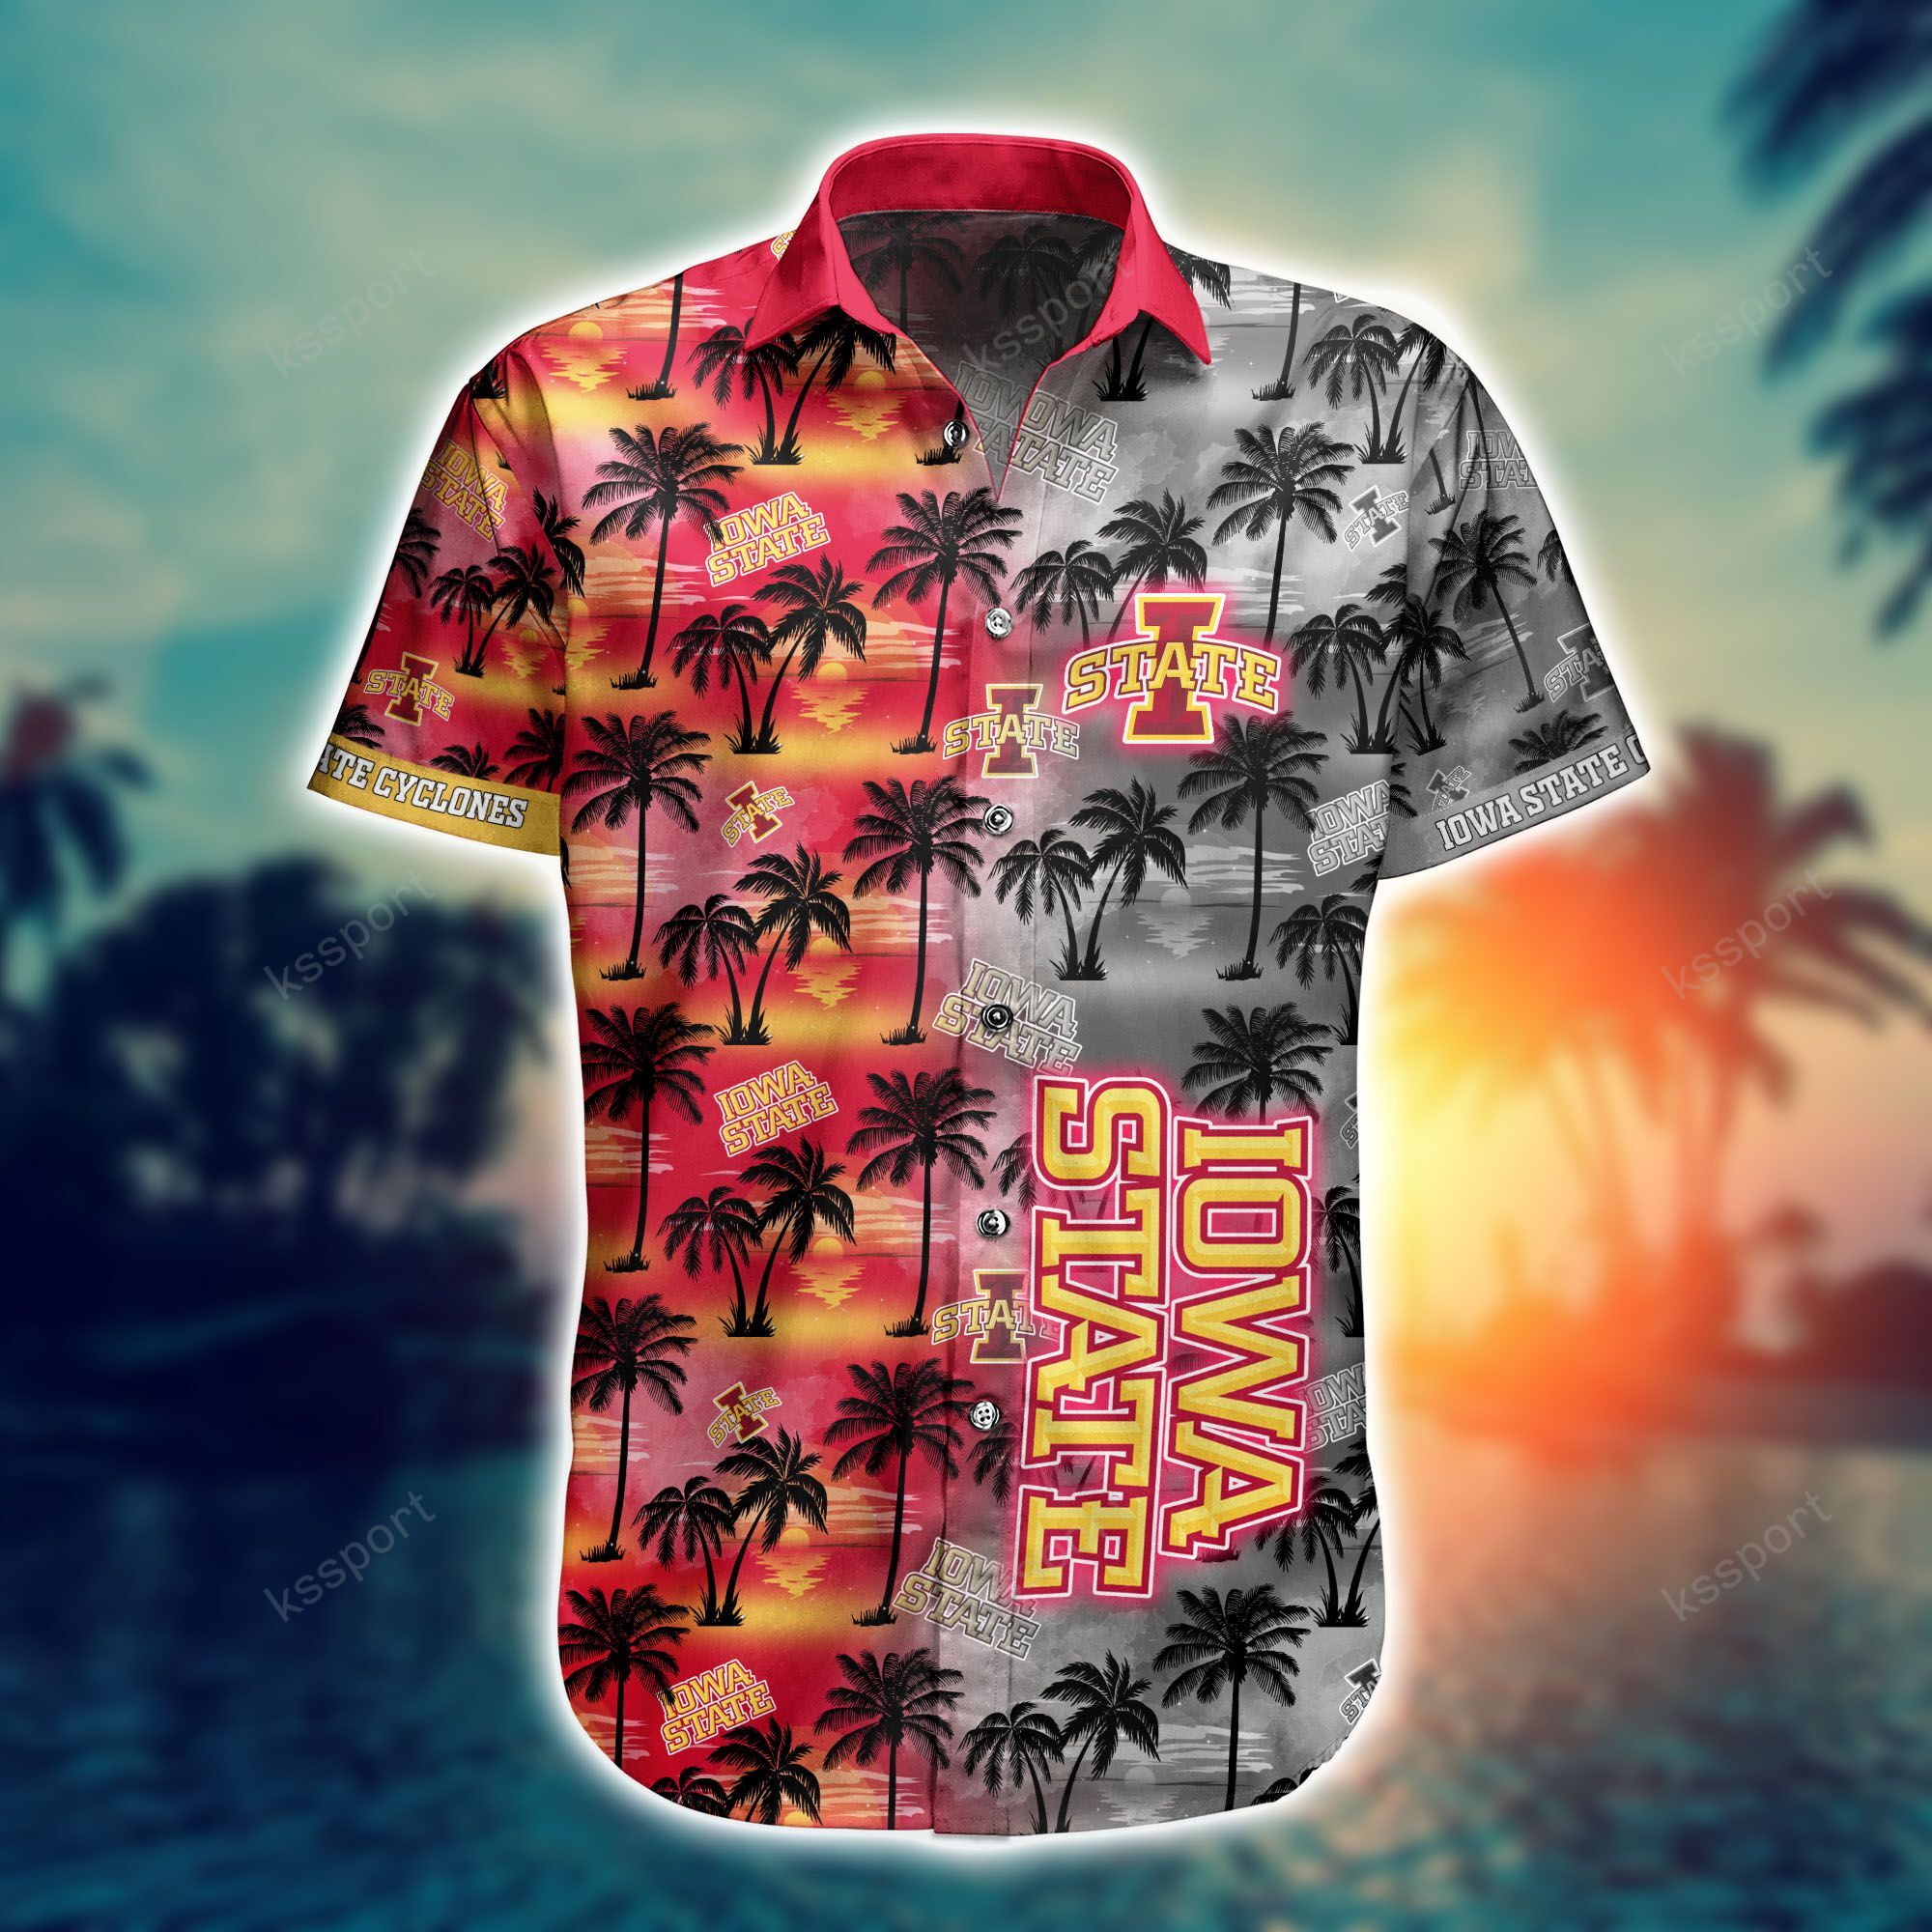 Hawaiian shirt and shorts is a great way to look stylish at a beach party 69